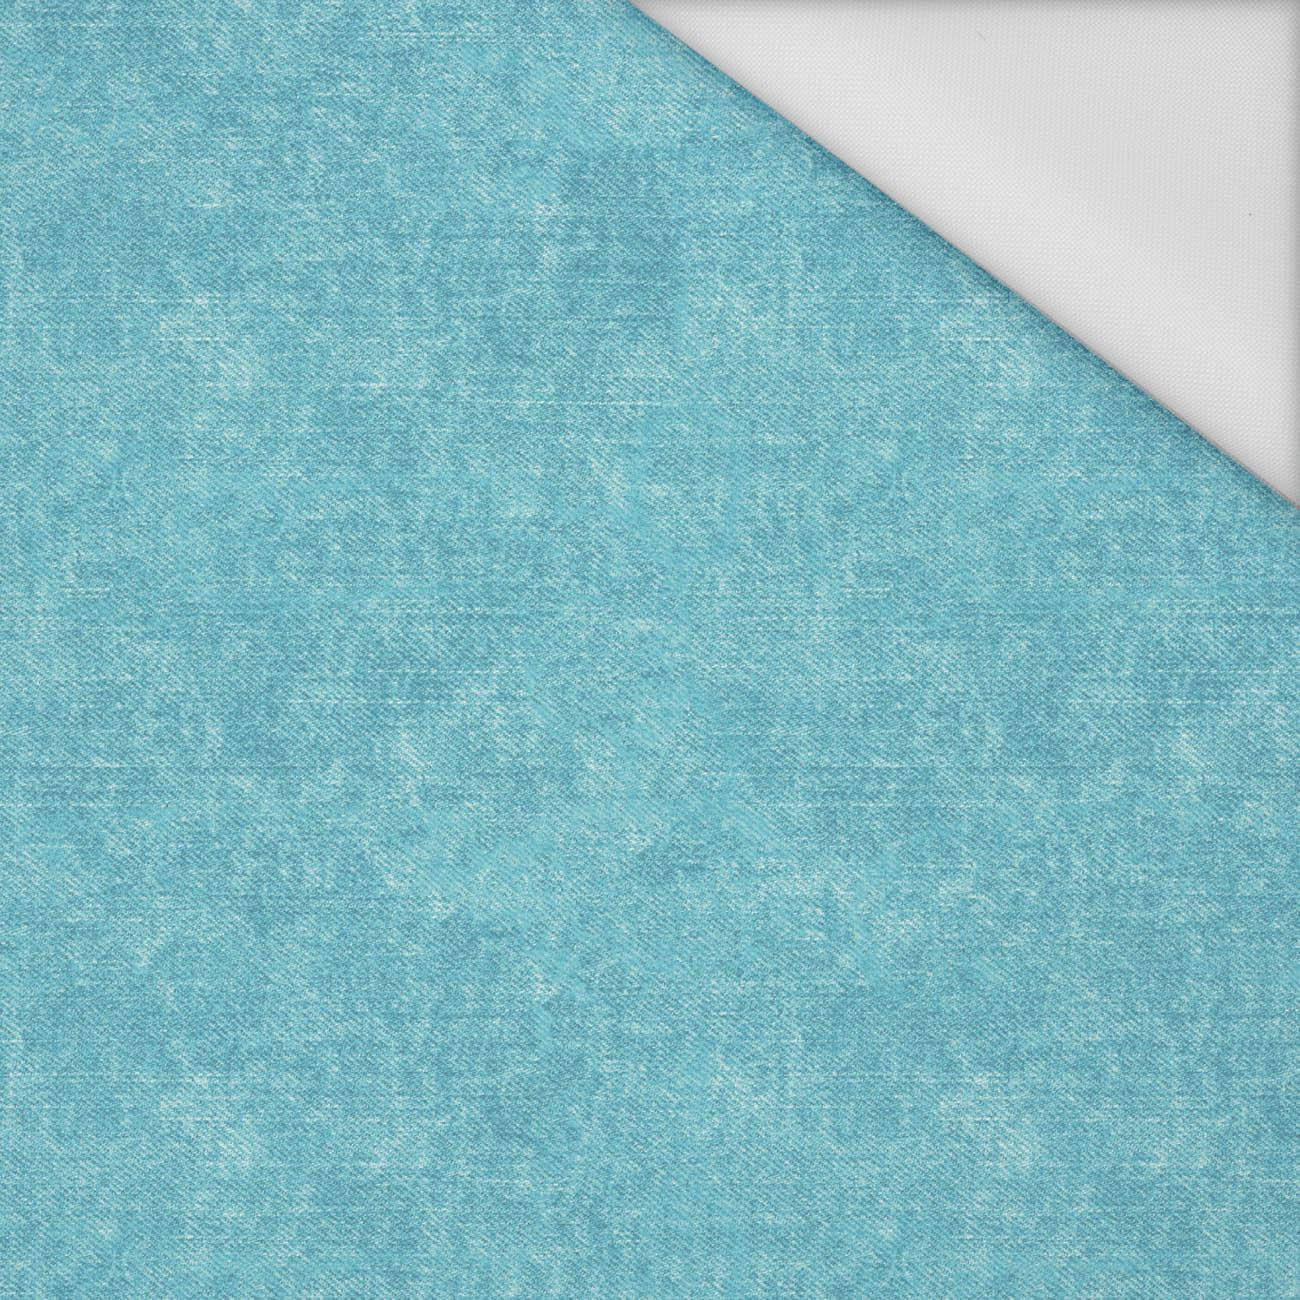 ACID WASH / SEA BLUE - Waterproof woven fabric